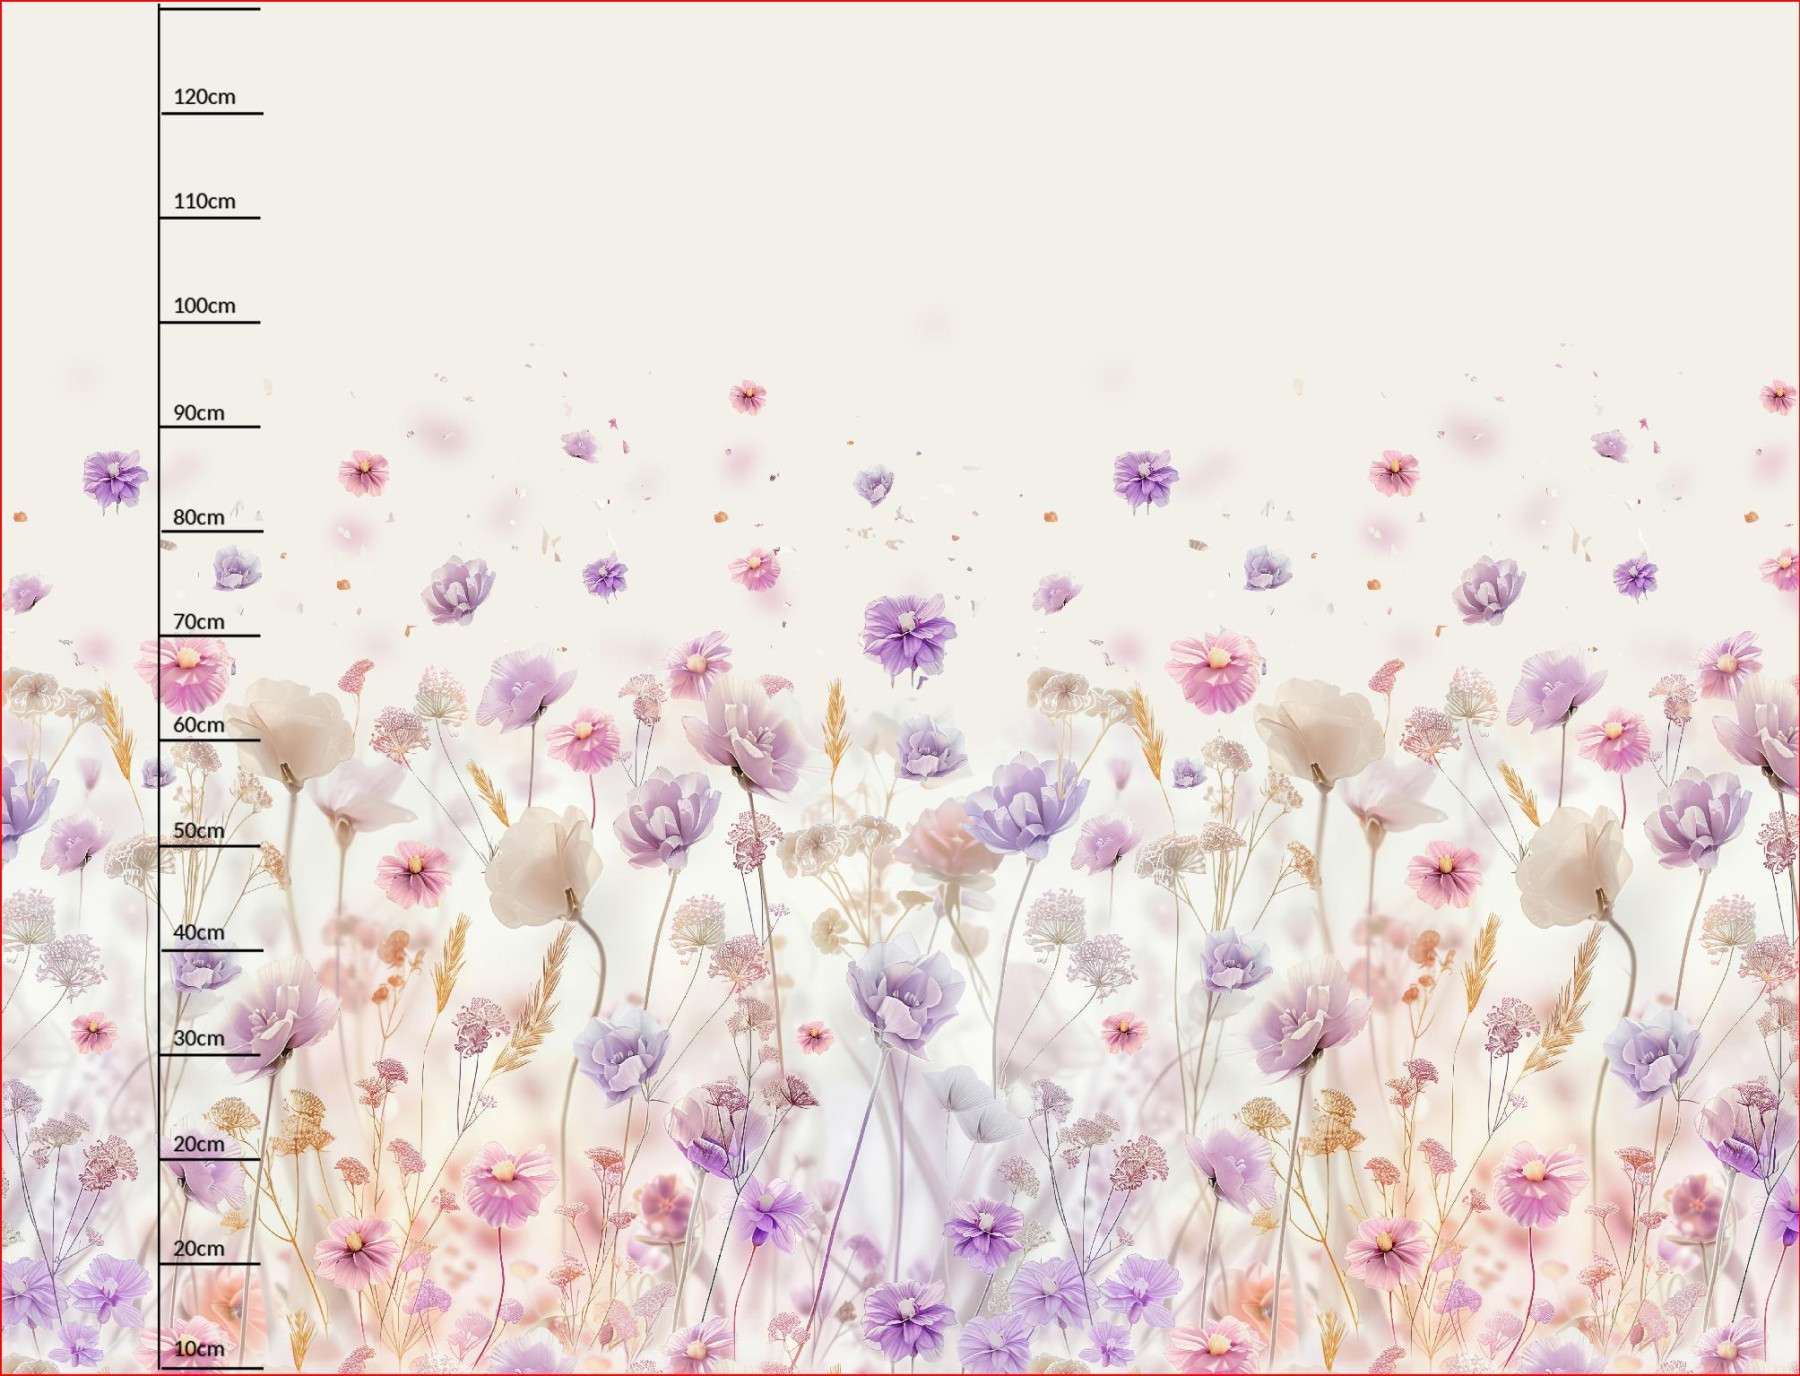 FLOWERS wz.10 - panel pro šaty TE210